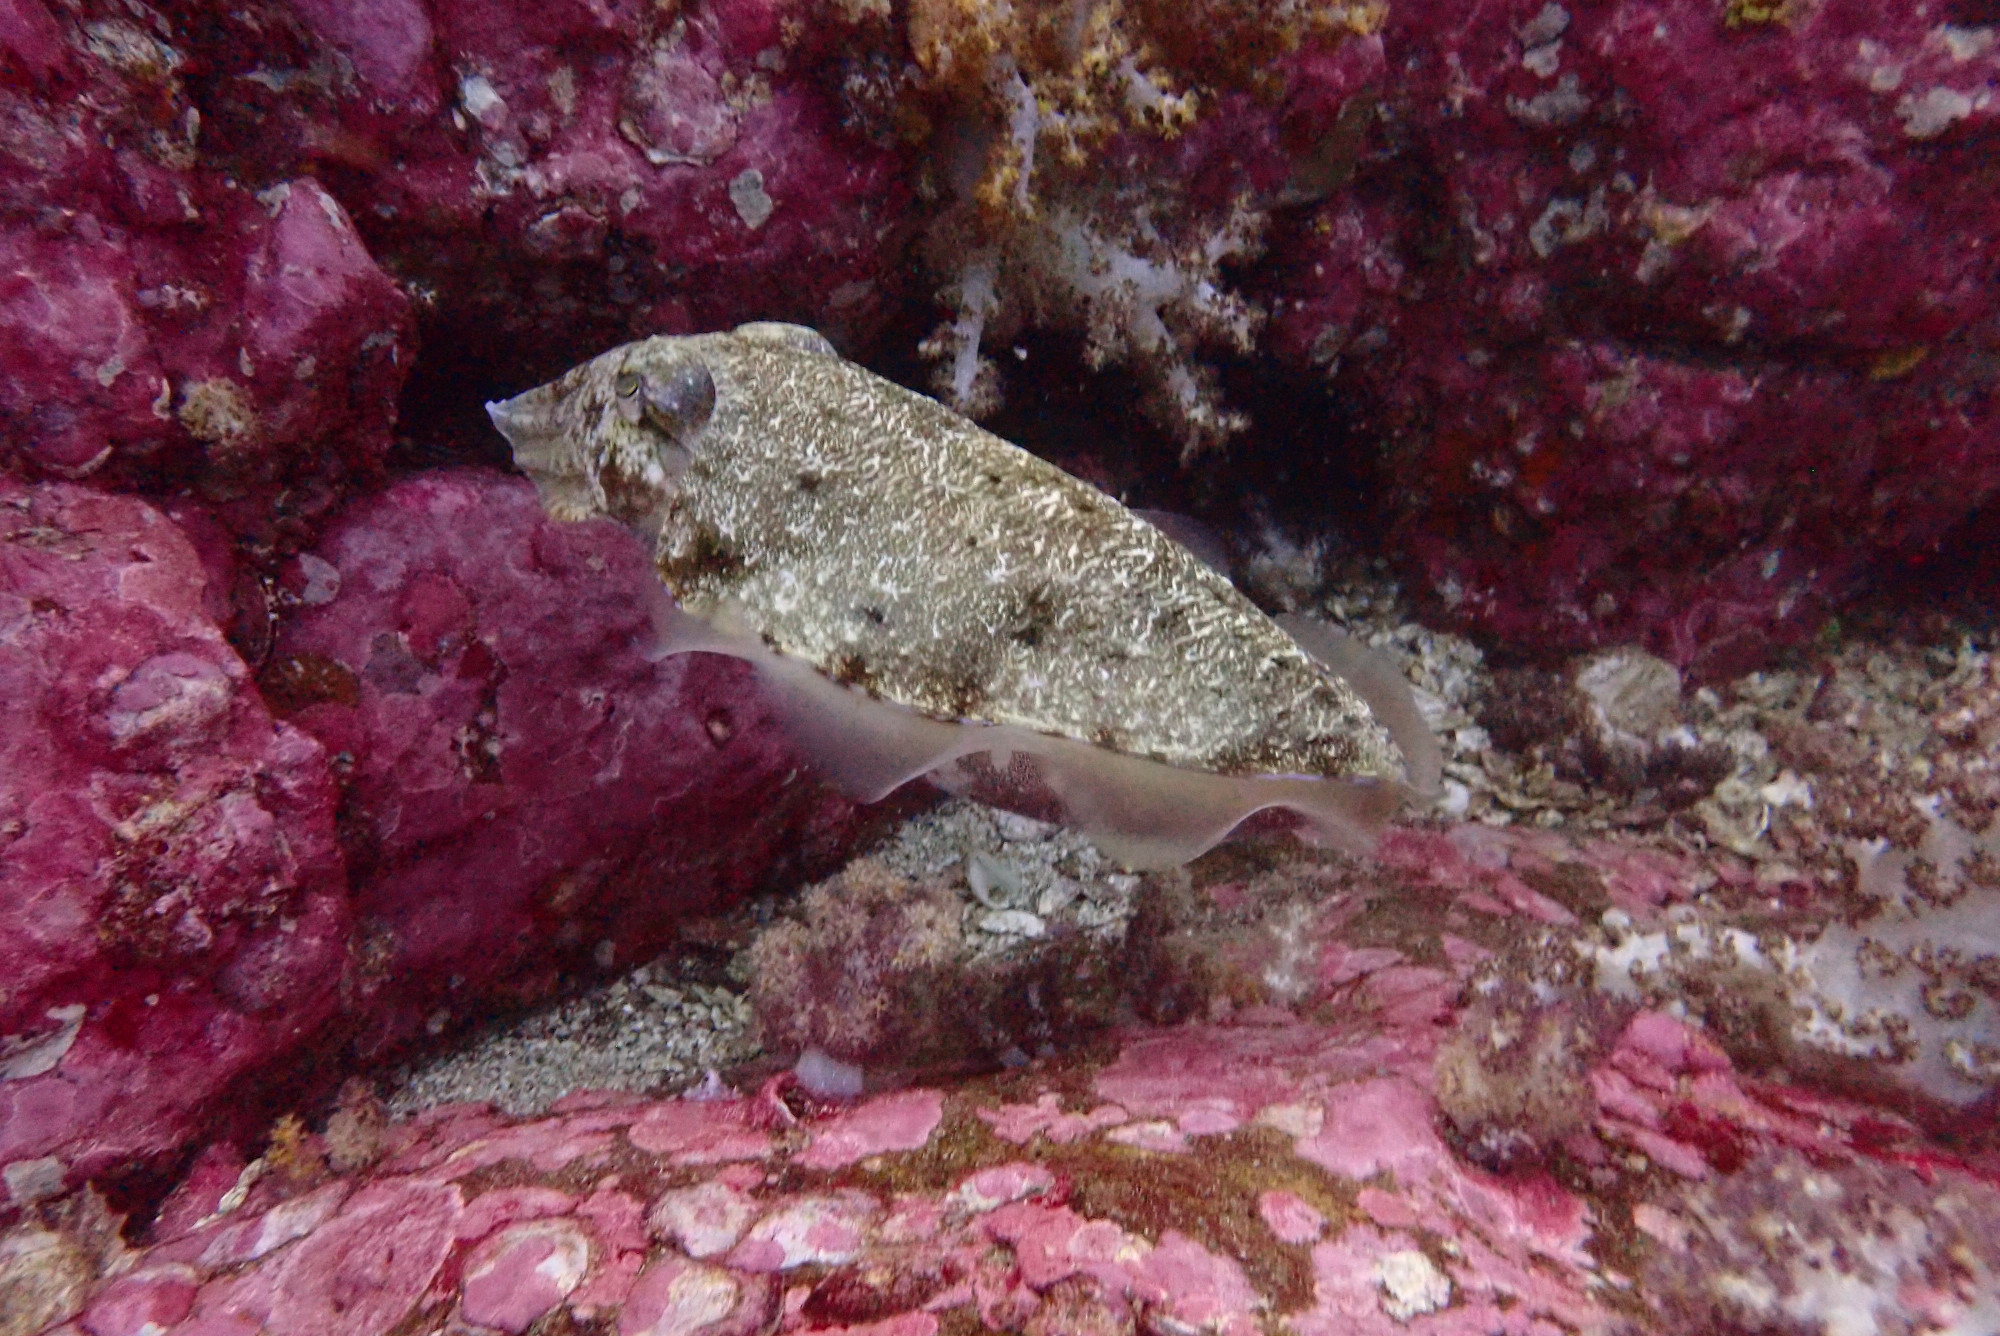 2nd Cuttlefish